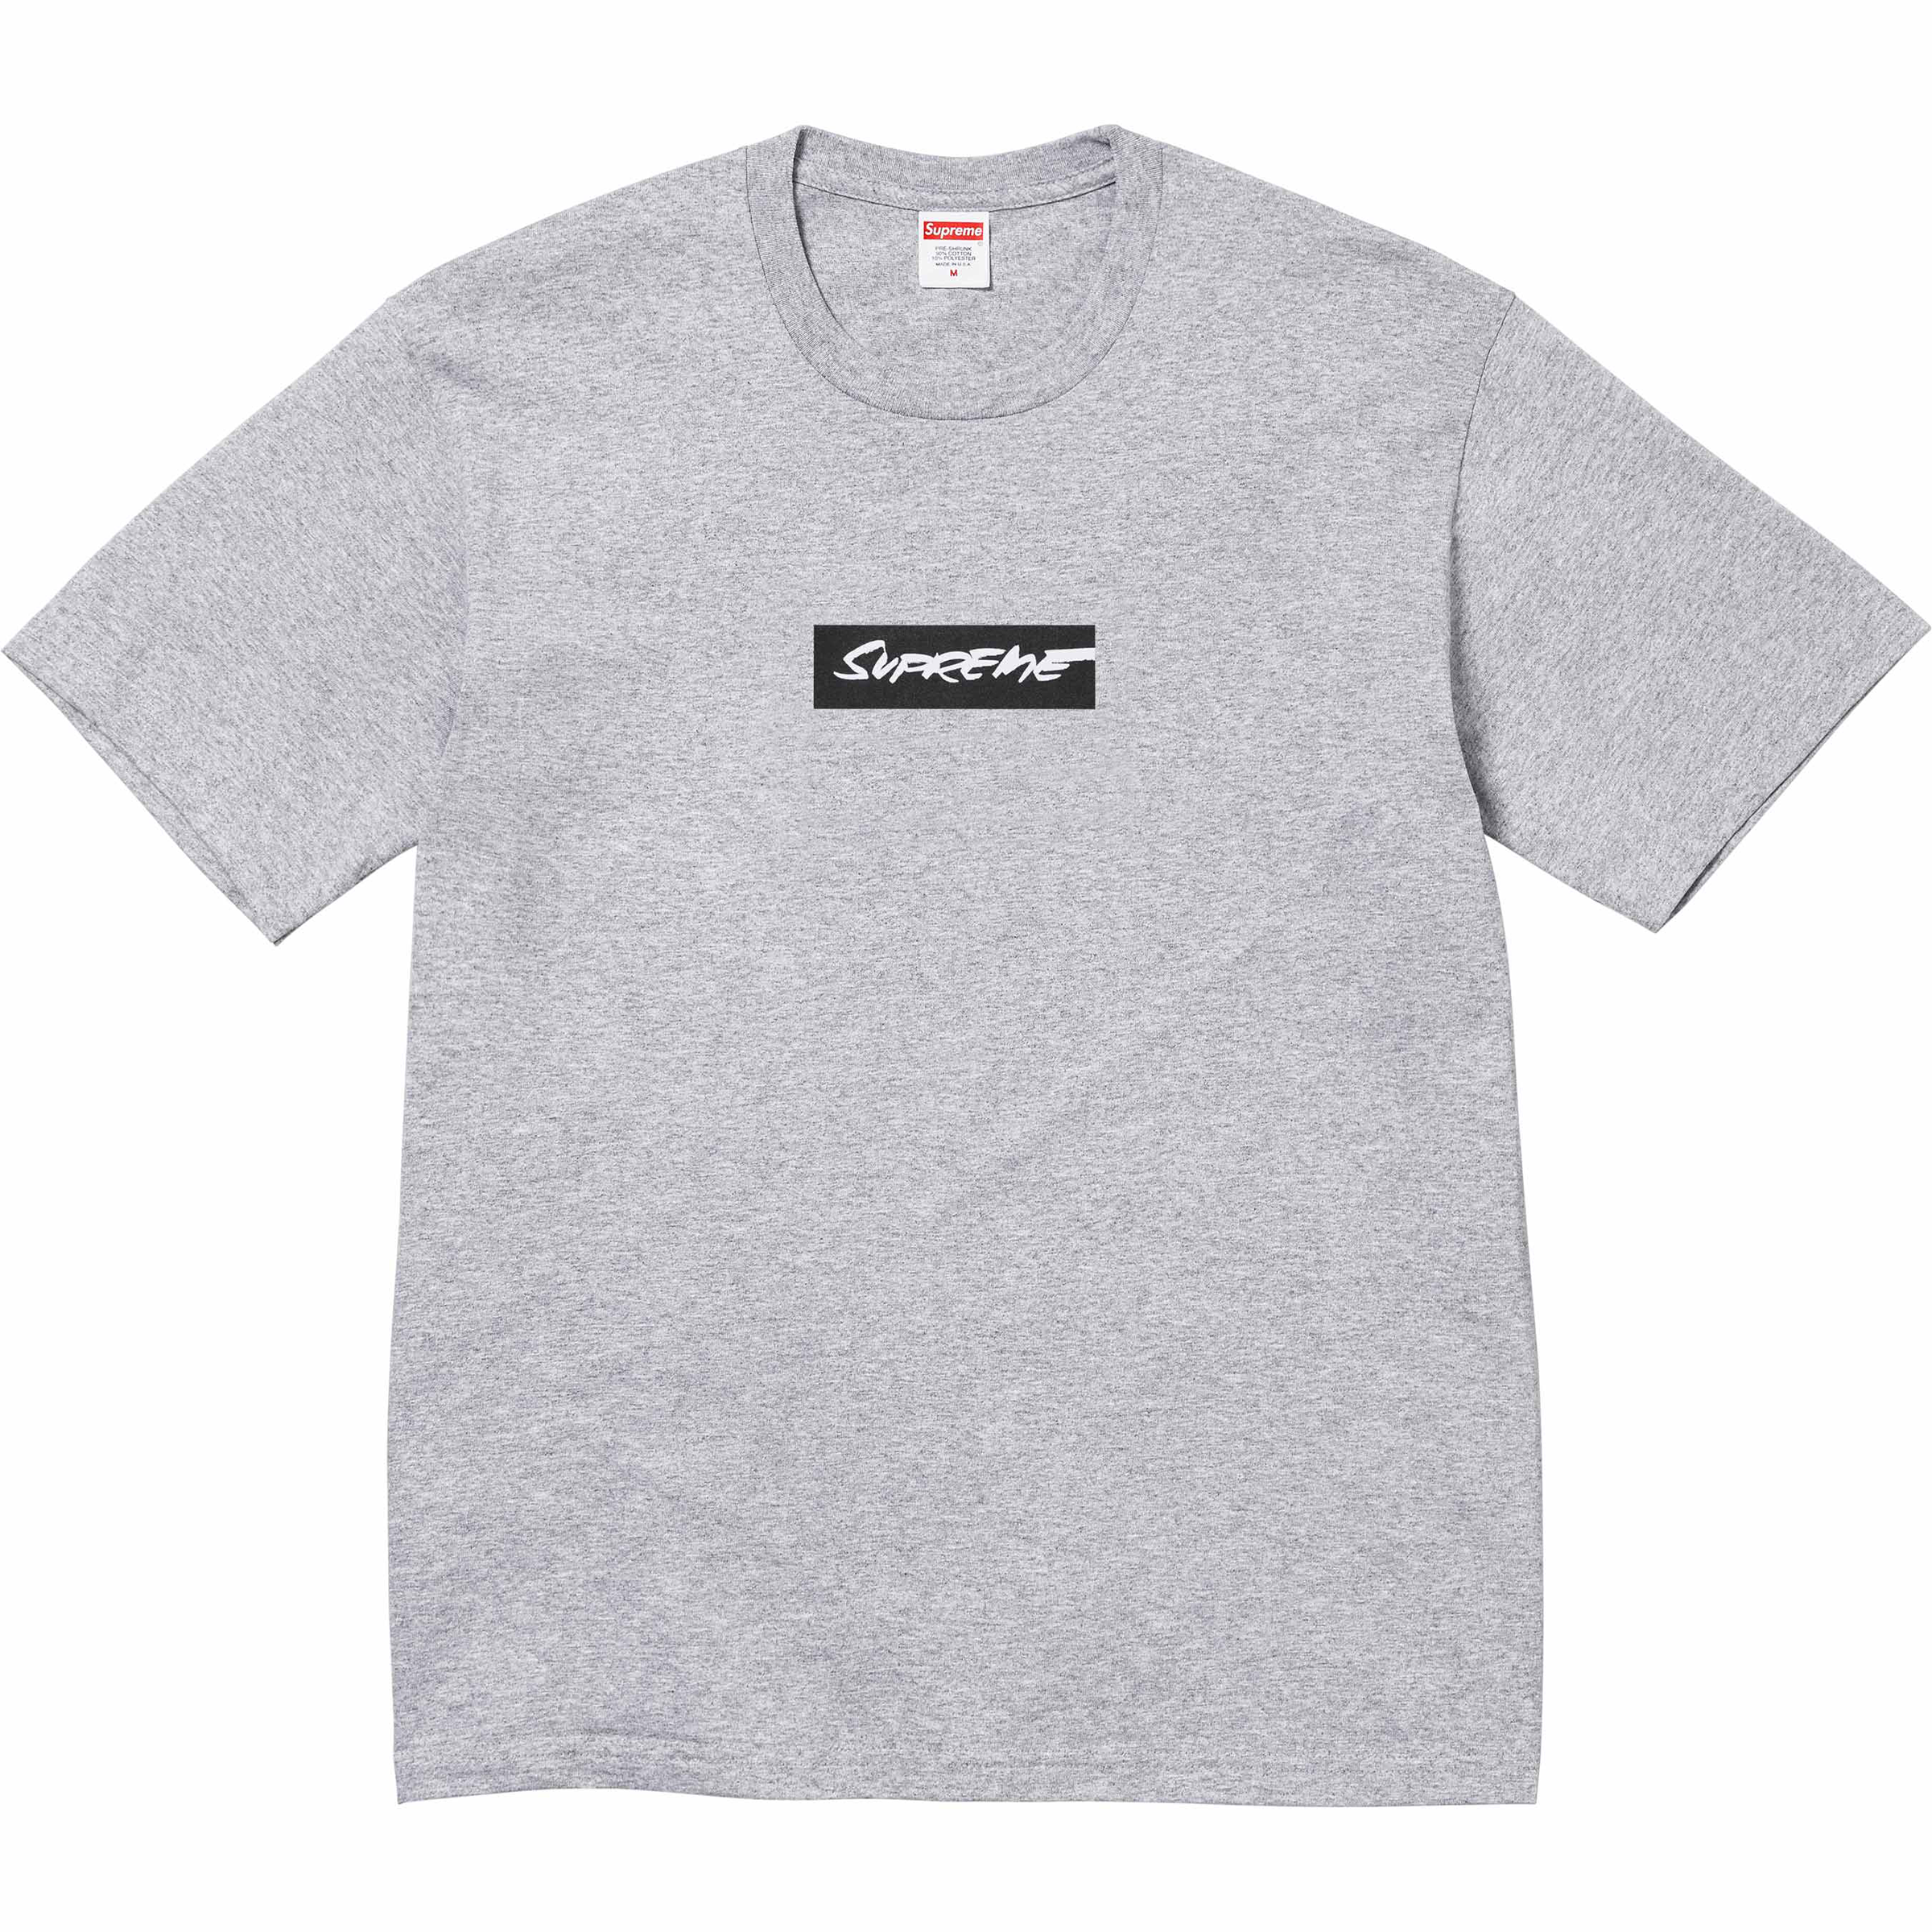 Supreme "Futura Box Logo" T-Shirt